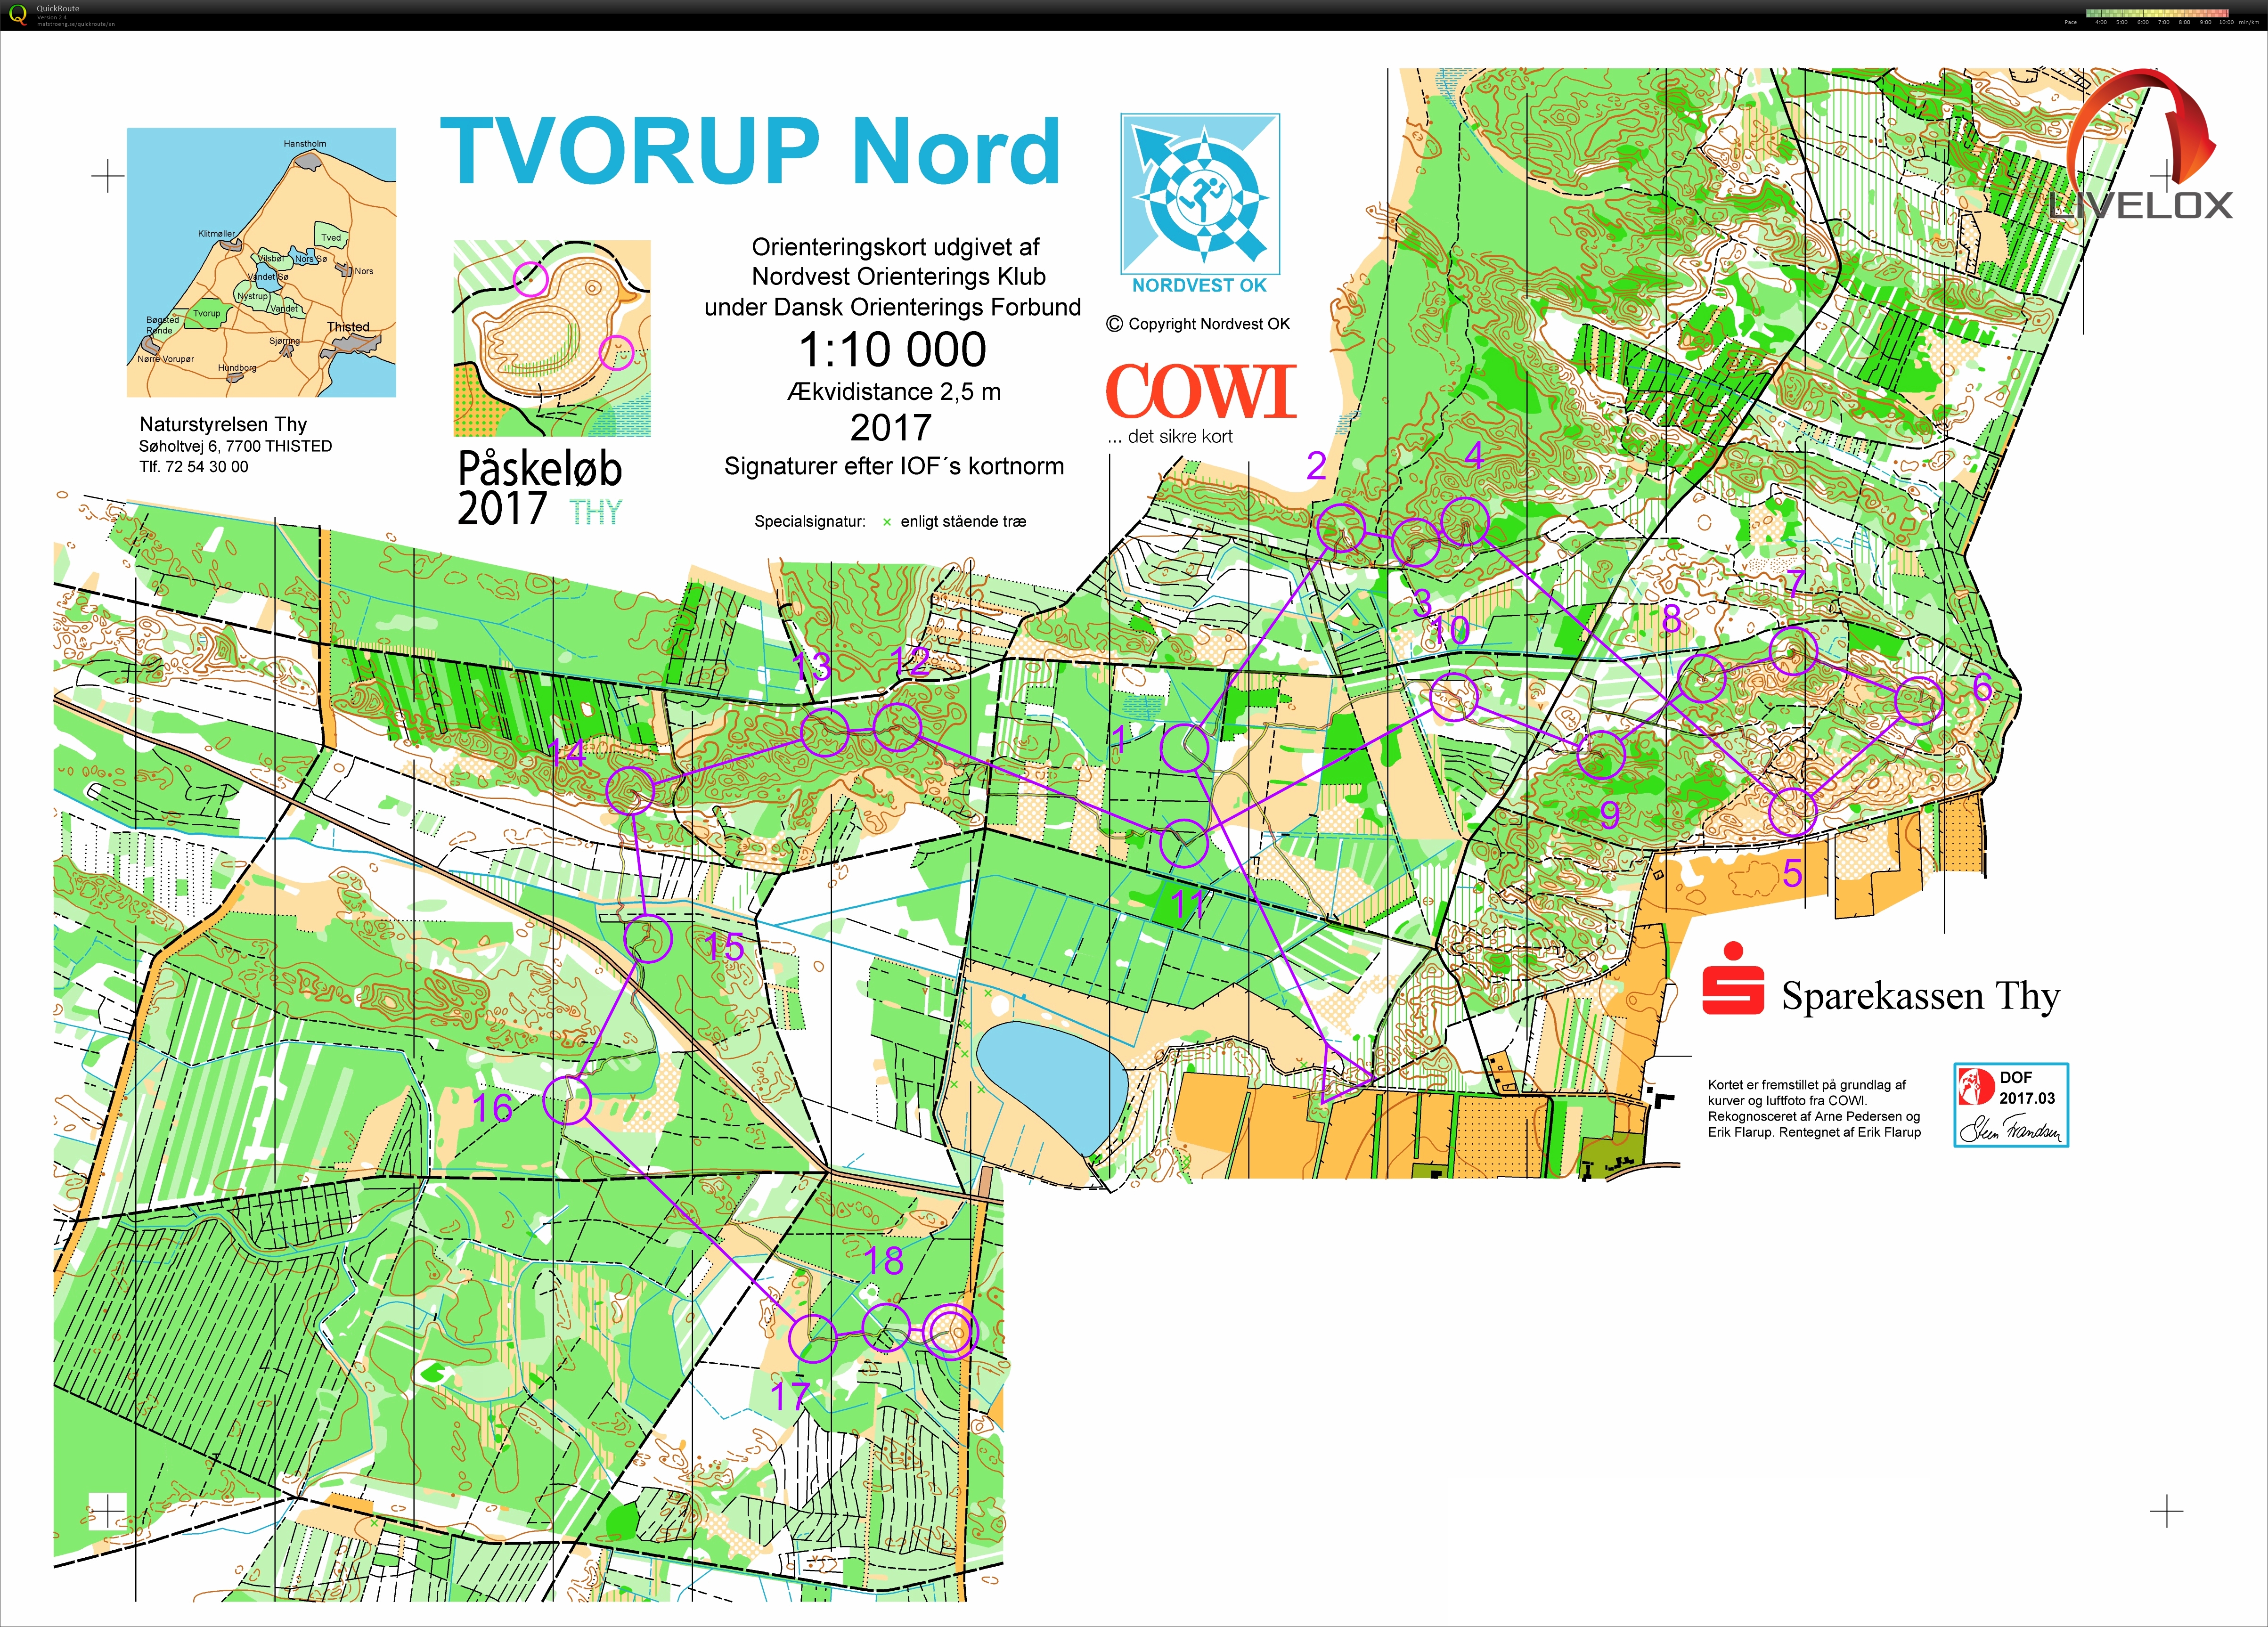 Tvorup Nord påskeløb 2017 etape 2 - H21AK (14-04-2017)